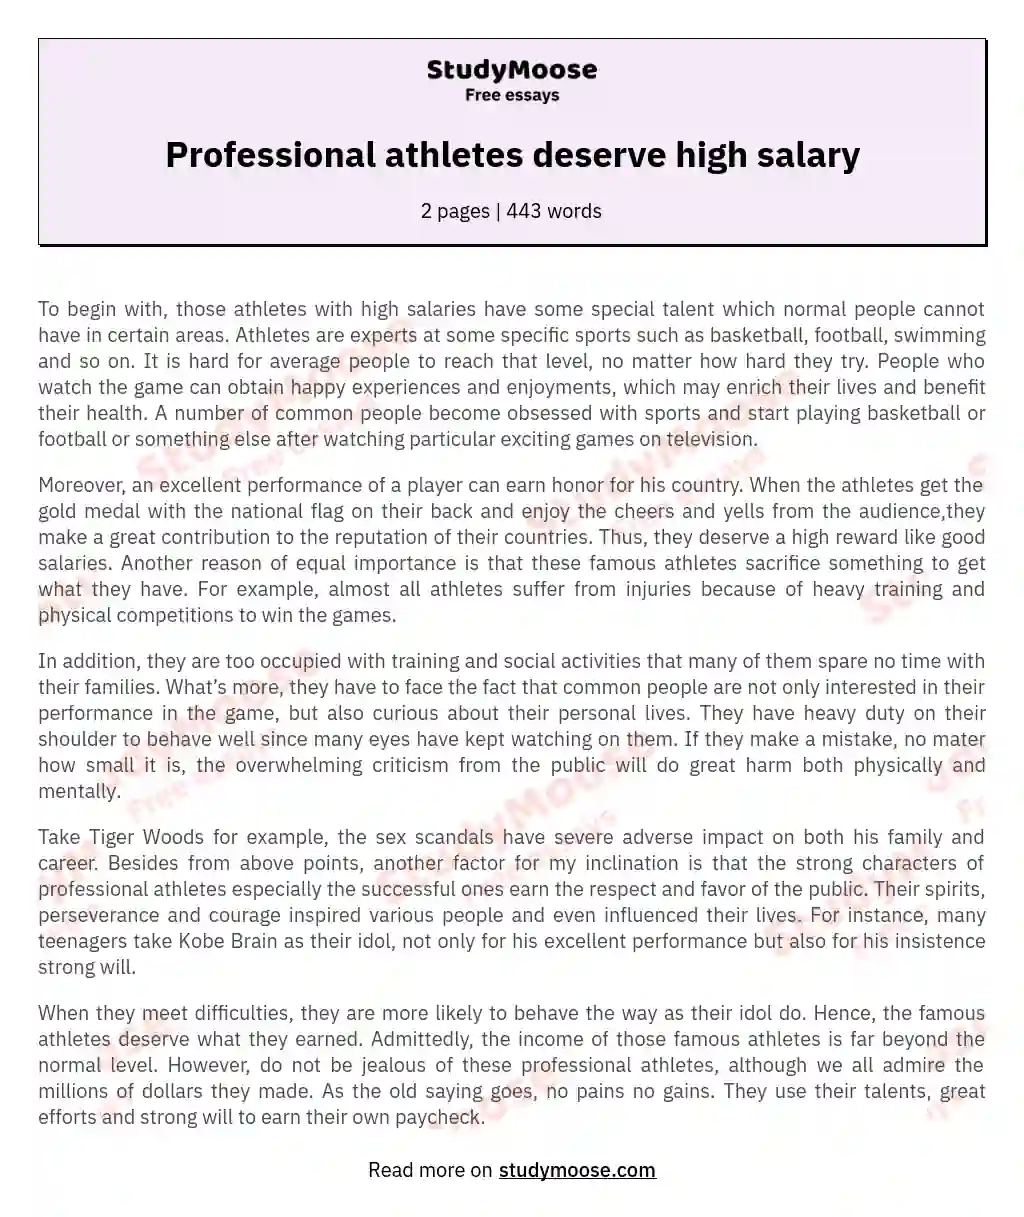 Professional athletes deserve high salary essay